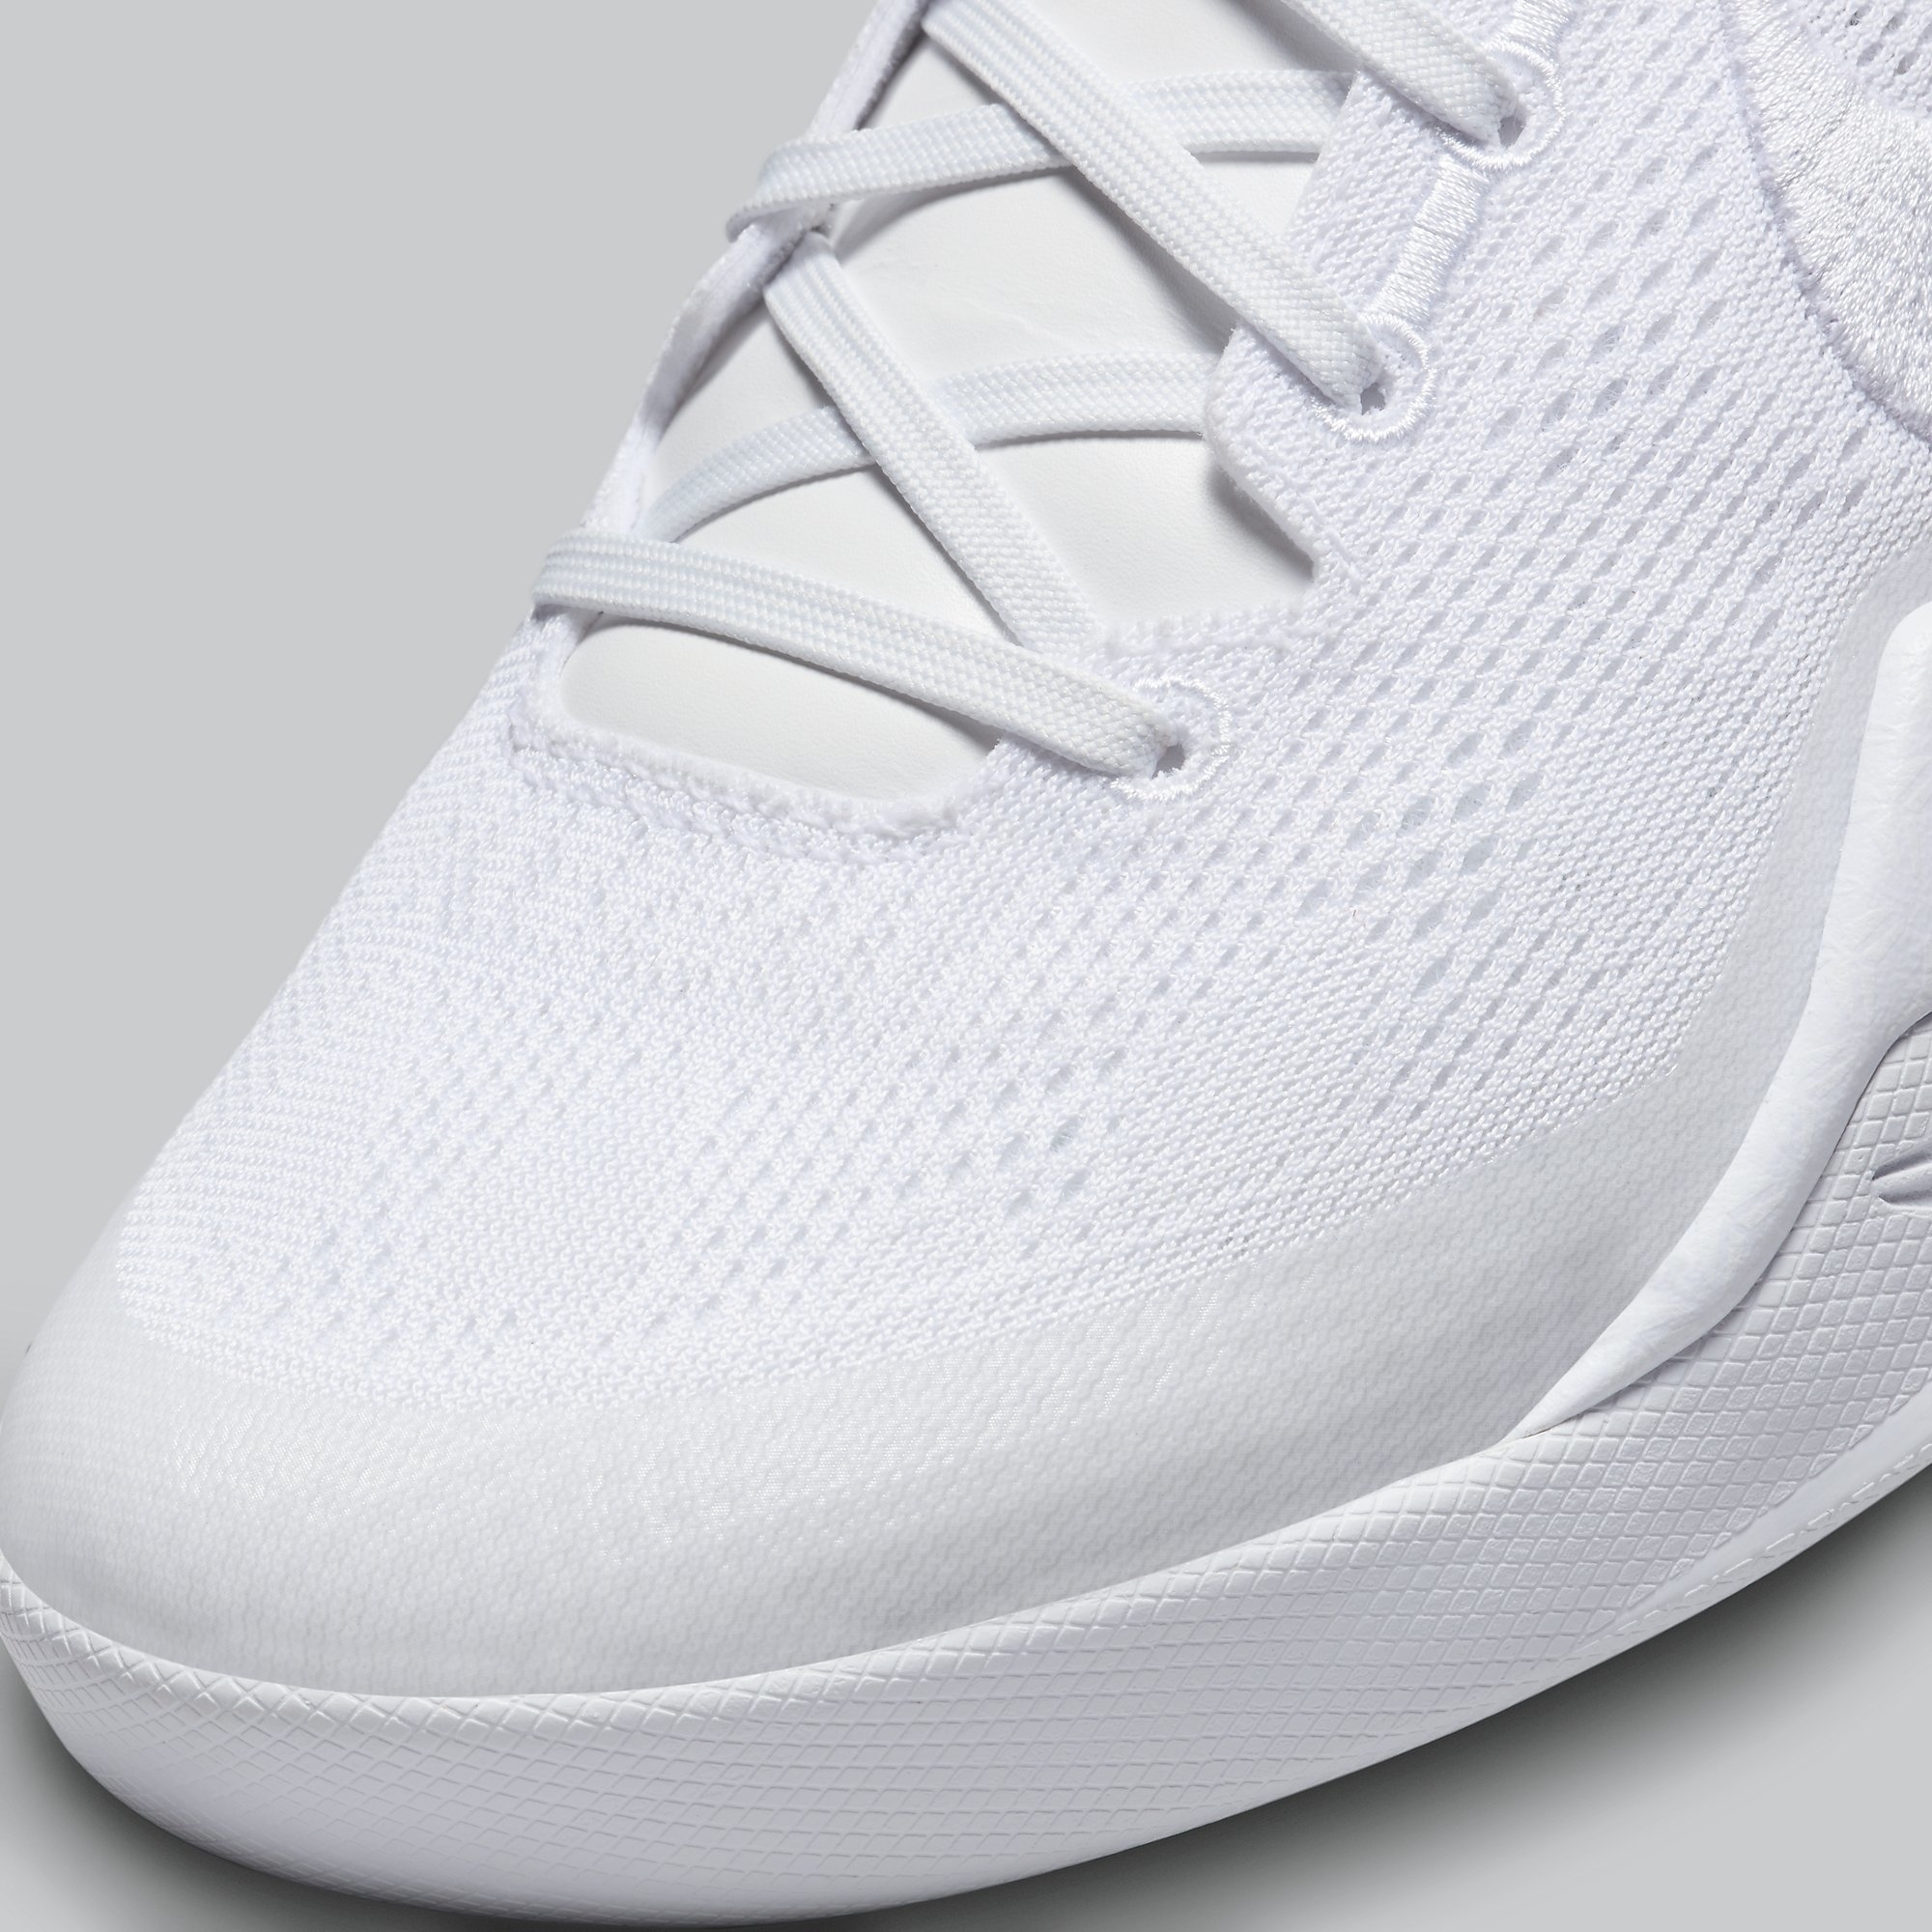 Nike Kobe 8 VIII Halo Triple White Release Date FJ9364-100 Toe Detail